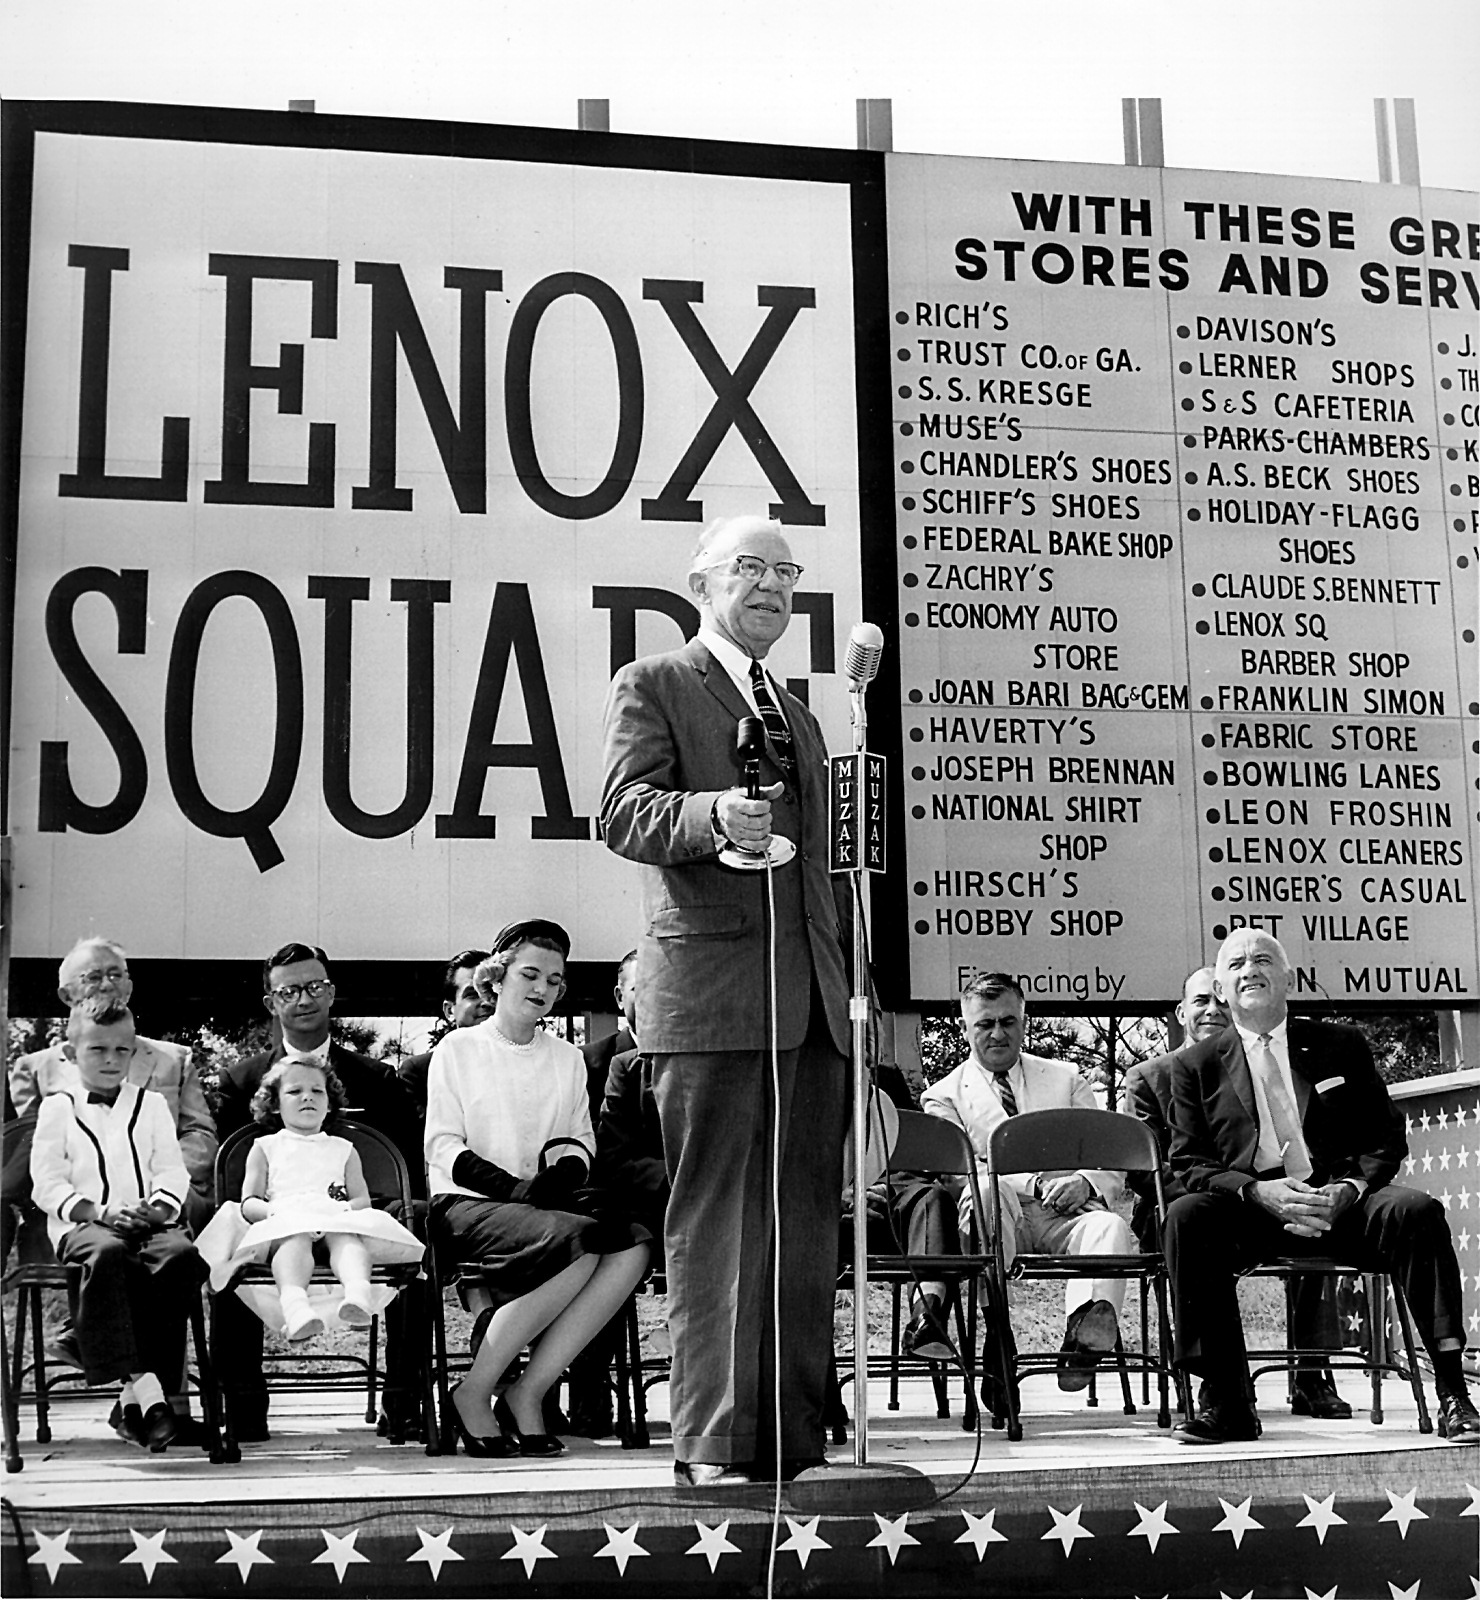 File:Lenox Square.jpg - Wikipedia